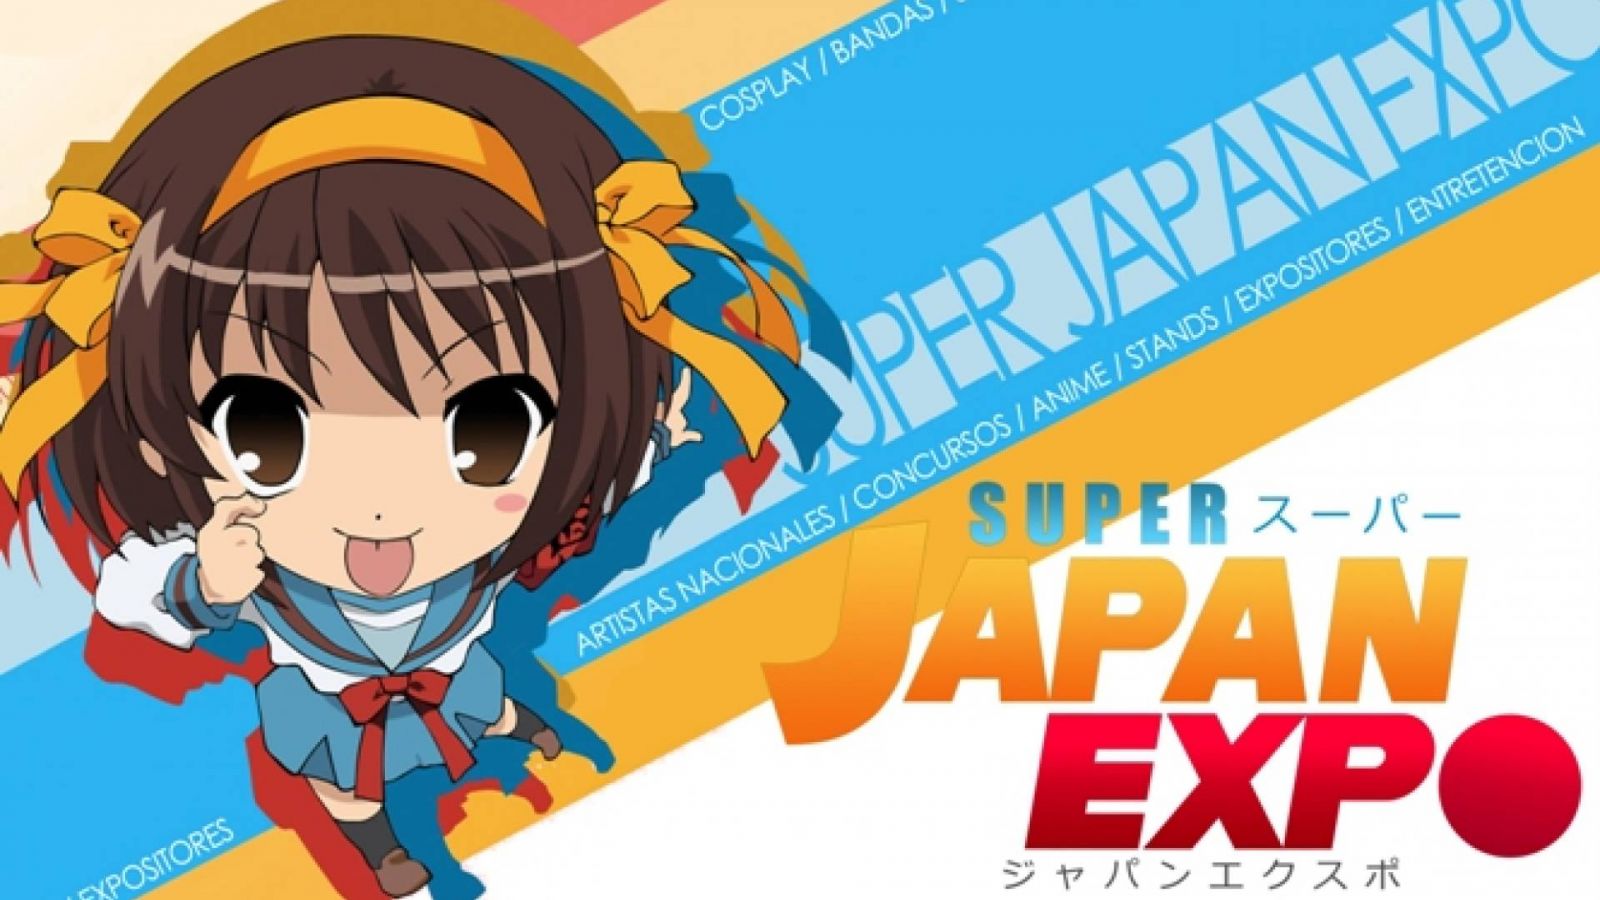 ¡No te pierdas la Super Japan Expo Chile esta semana! © Super Japan Expo